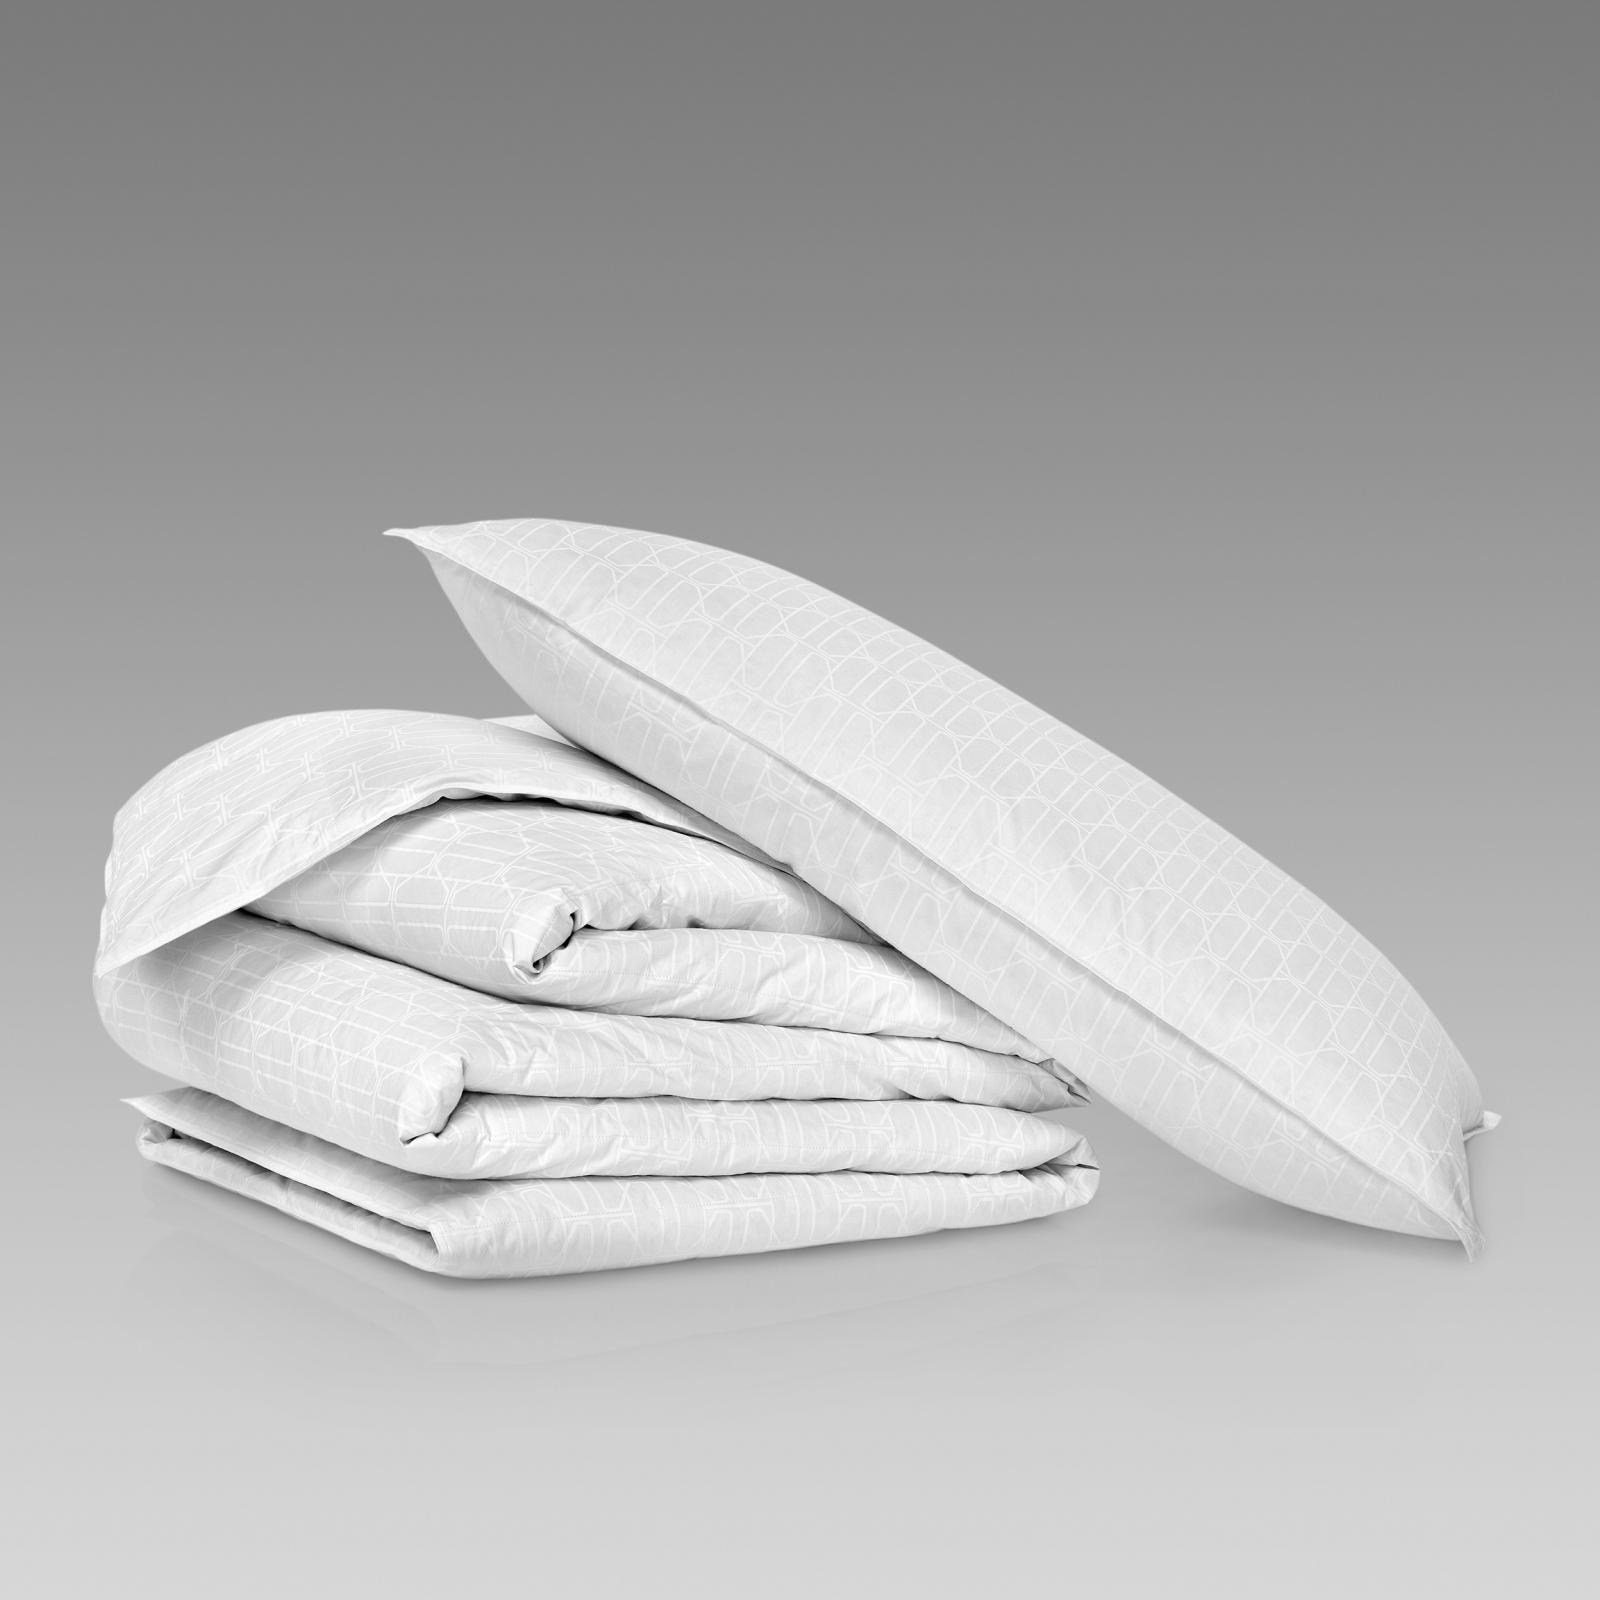 Одеяло Орион Togas 200х210, размер 200х210 см - фото 10